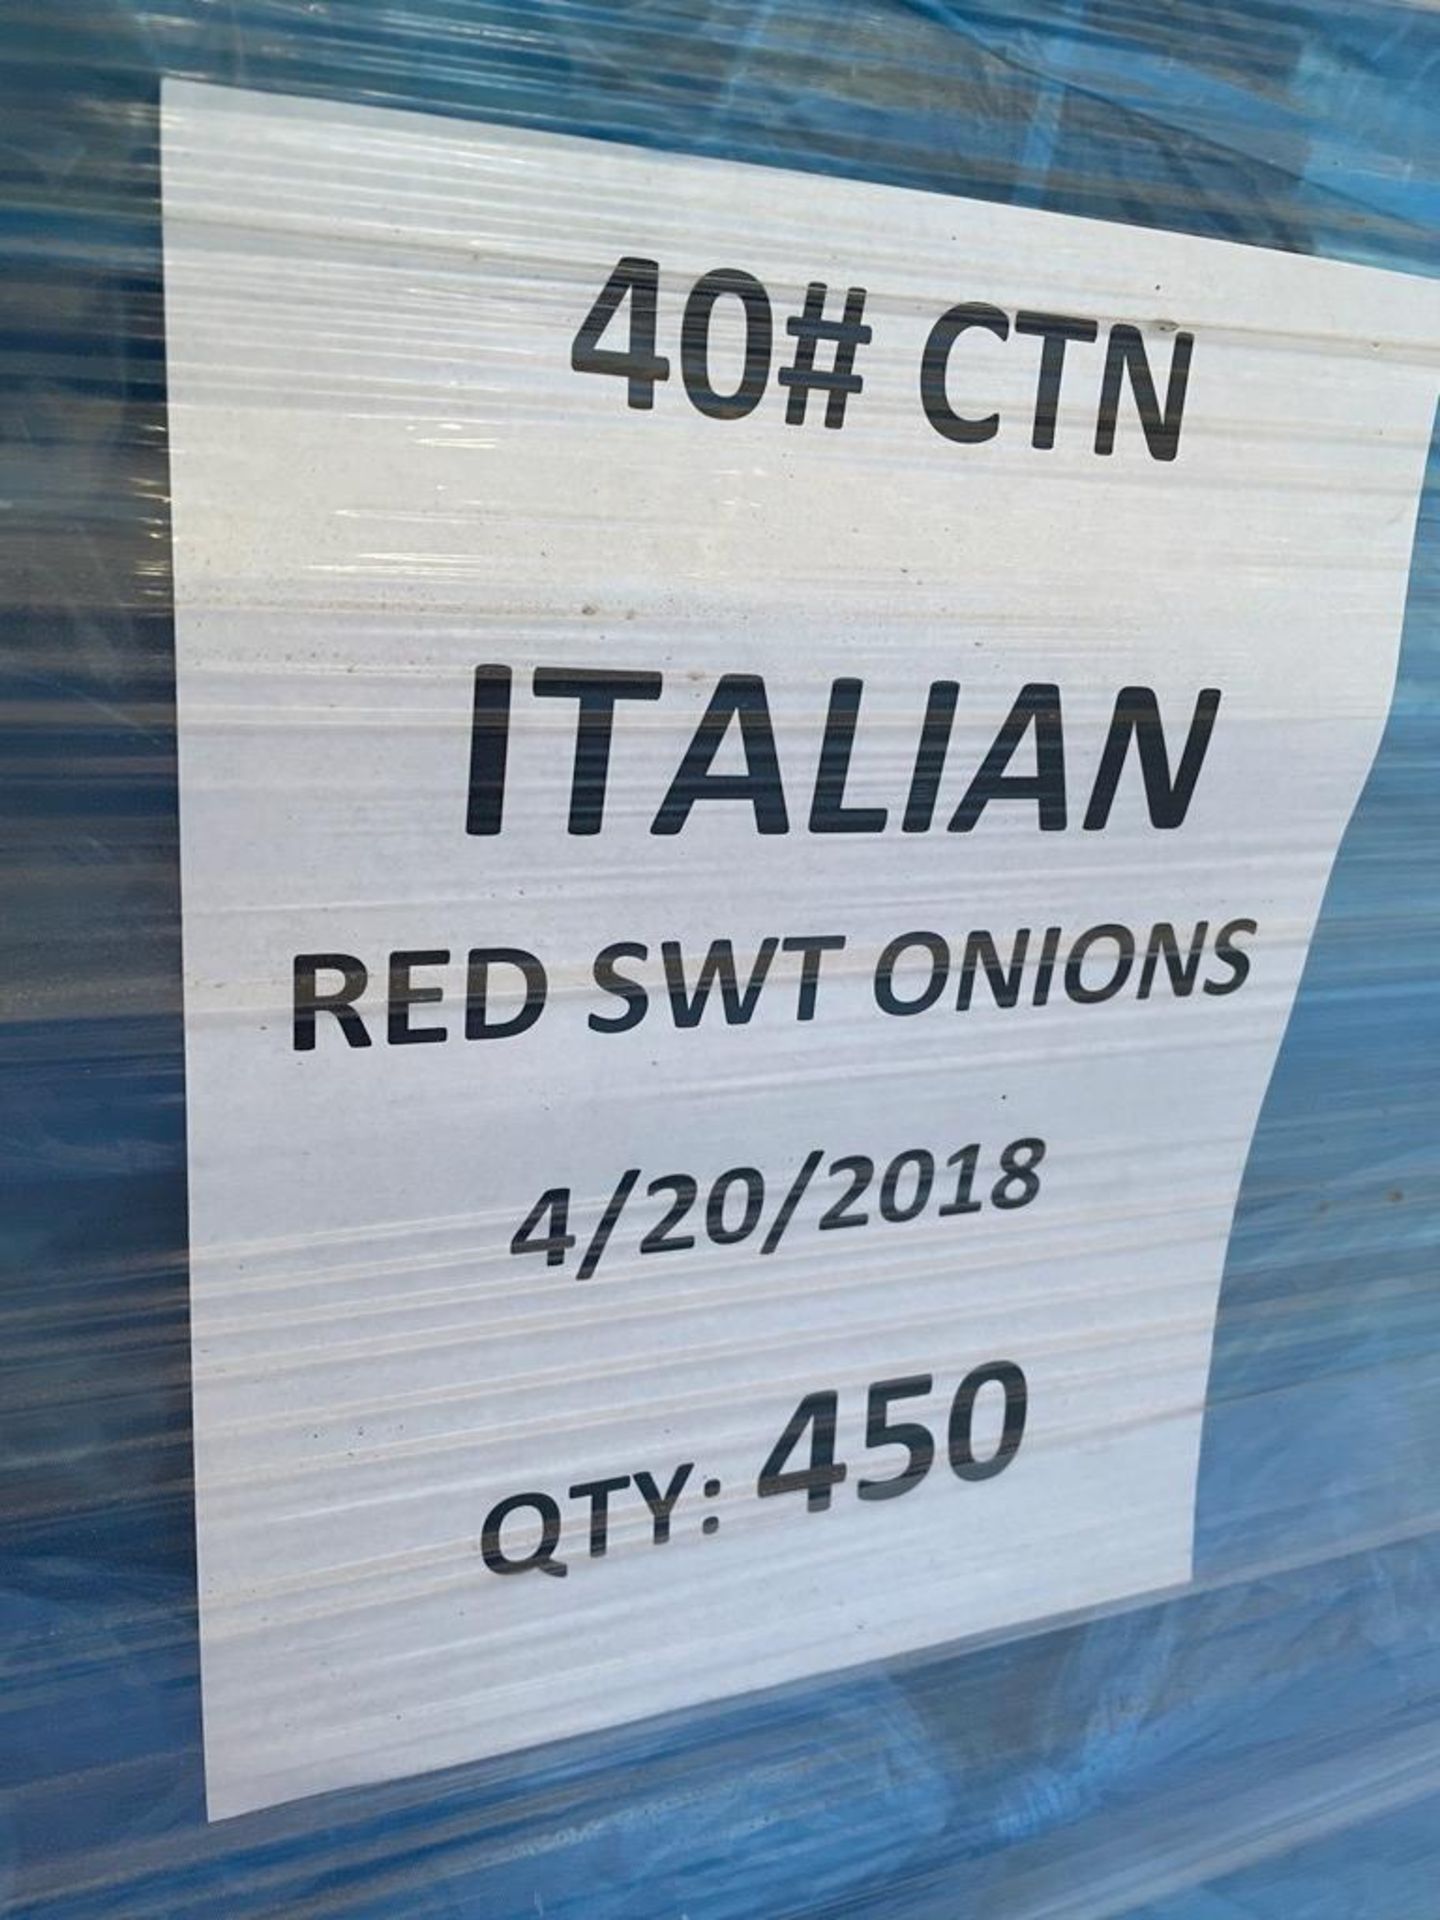 Italian Red Swt Onions 40# CTN - Image 2 of 2